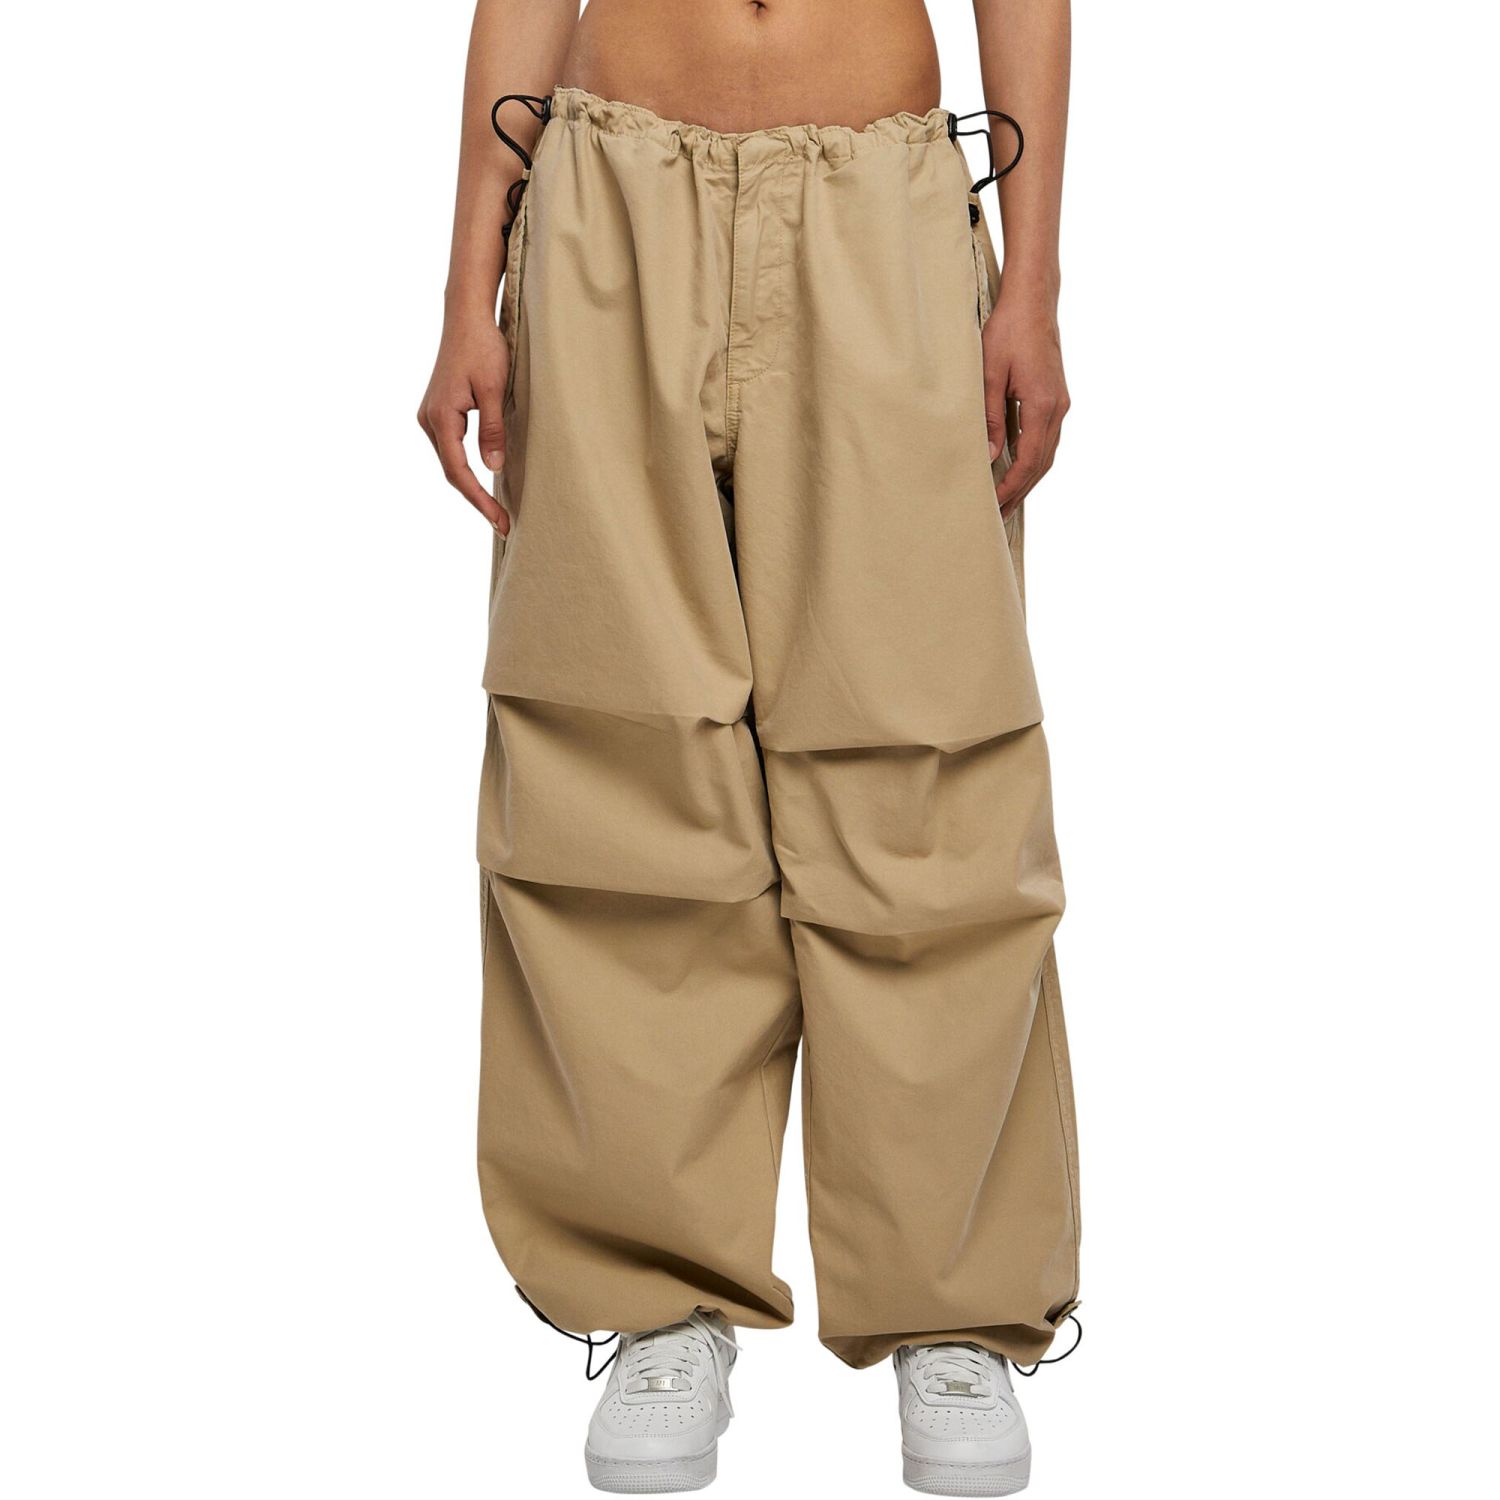 | Pants Oversized FRAUEN Classics Hosen | - Hosen Hose | | Urban Parachute Street Urban & Shop Ladies